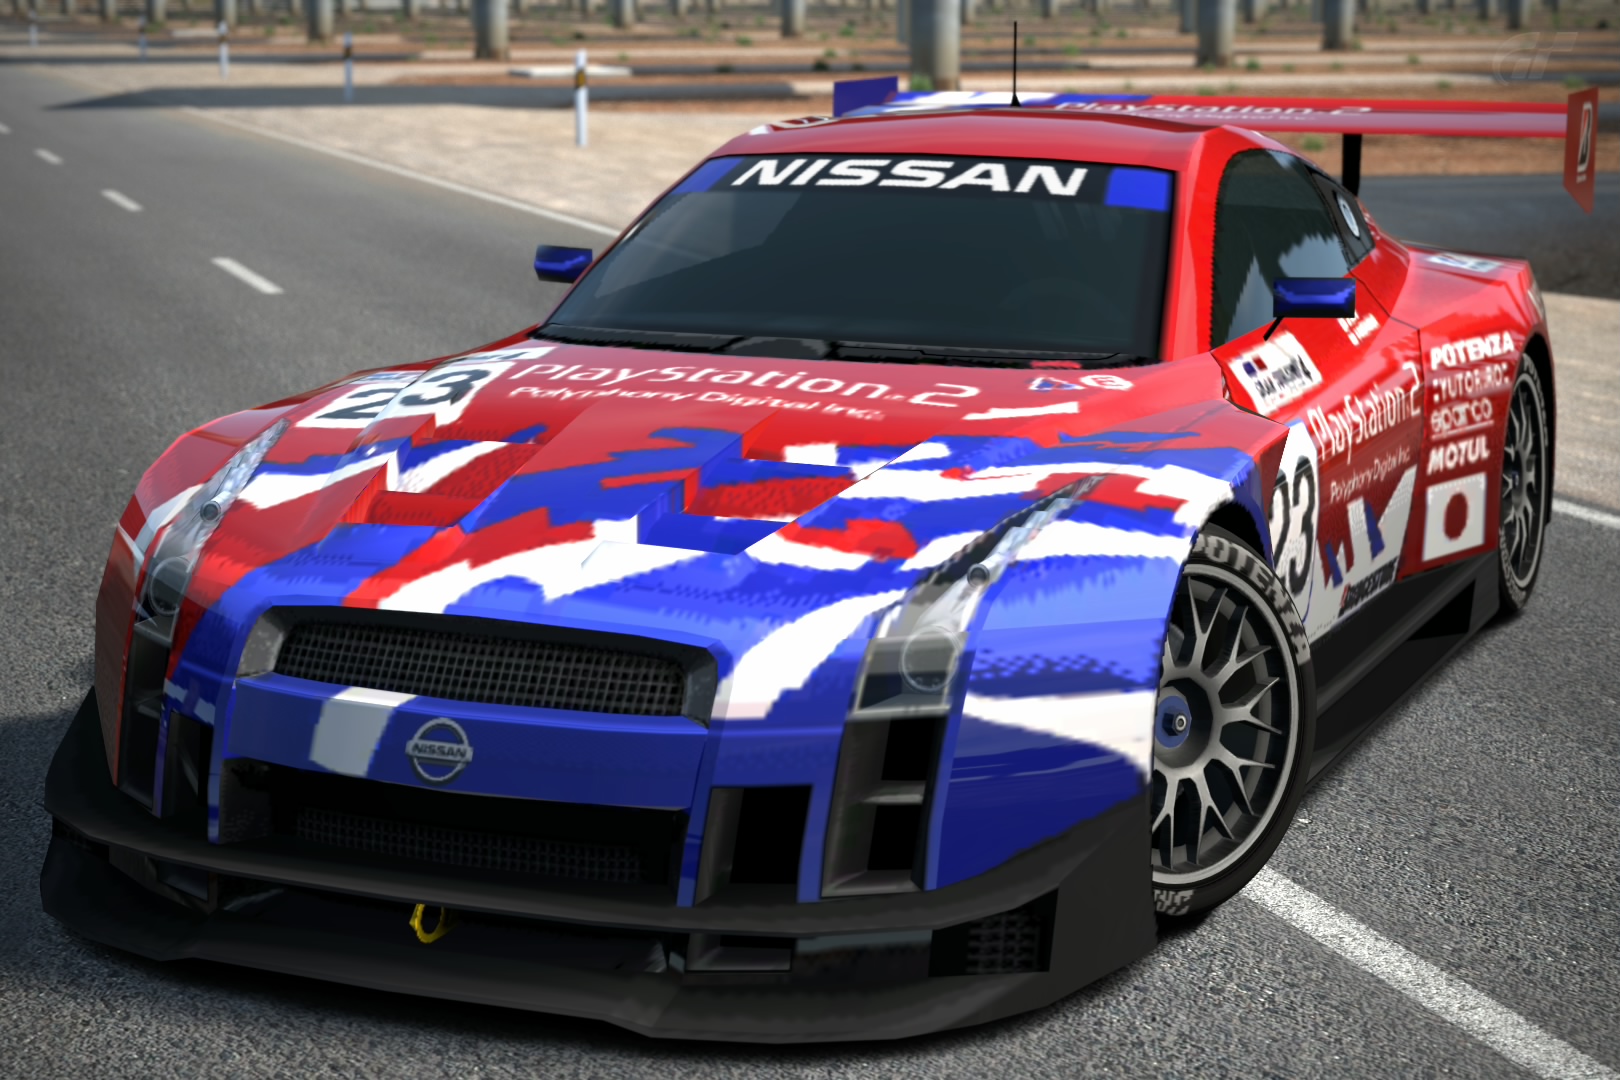 Gran Turismo 4_Nissan GT-R LM Race Car_Nissan Fairlady Z C…